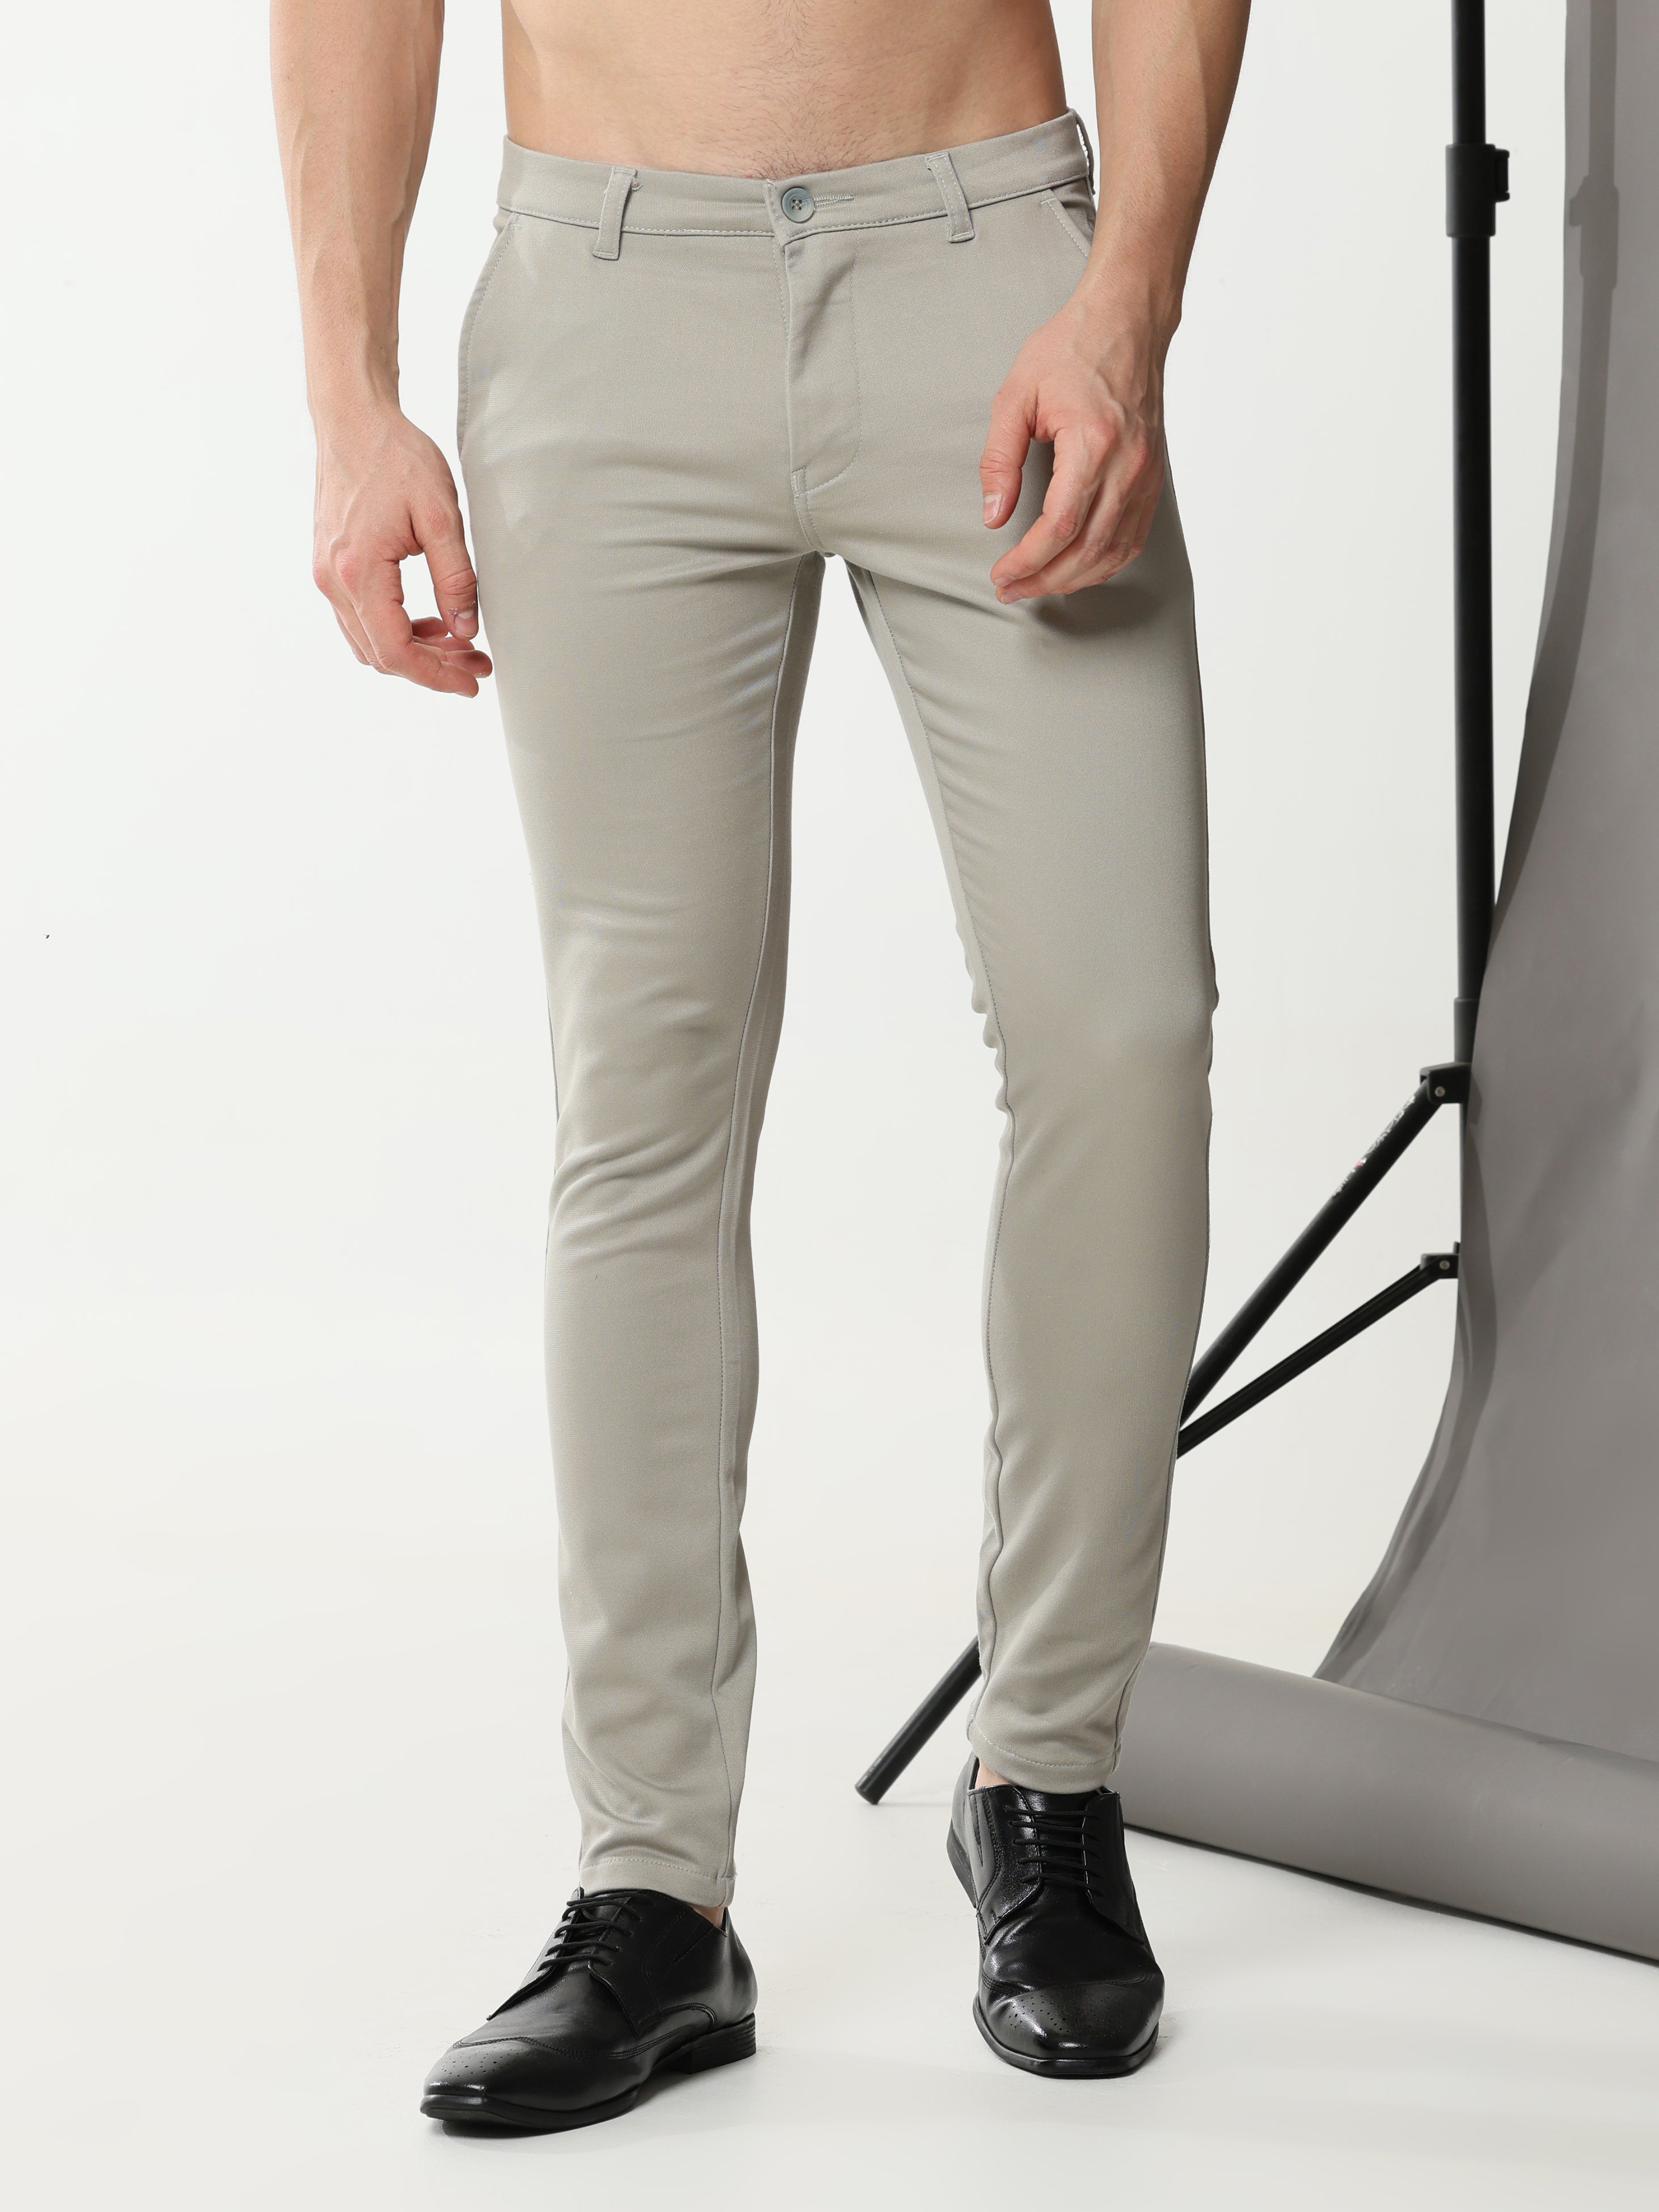 LT Grey Stretch cotton trouser